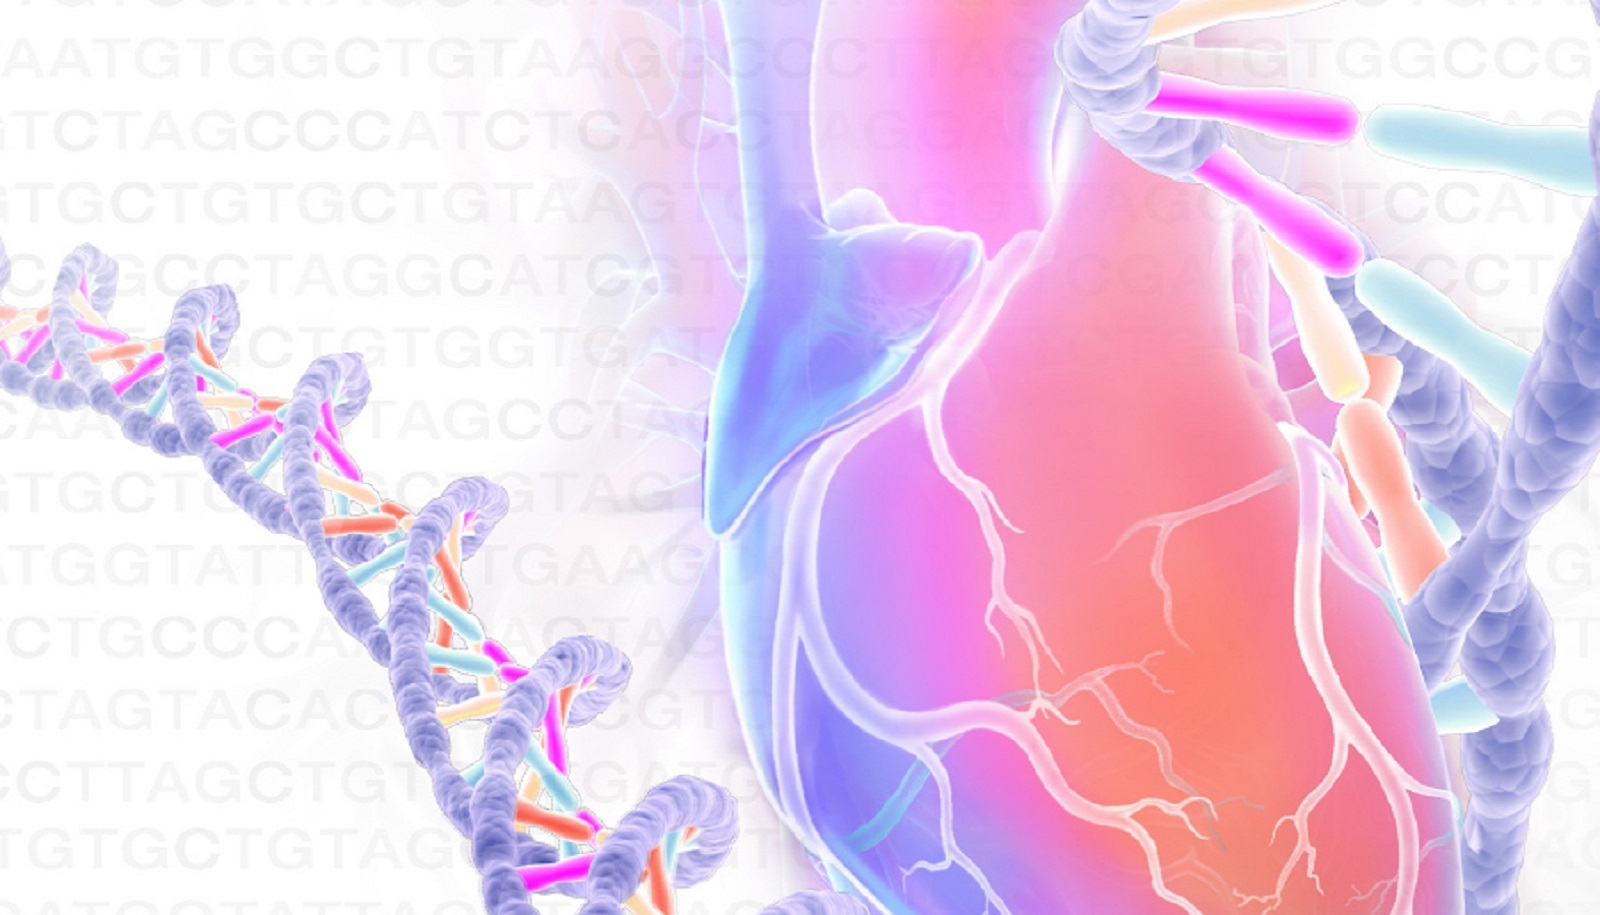 Genetics of Heart & Vascular Disease